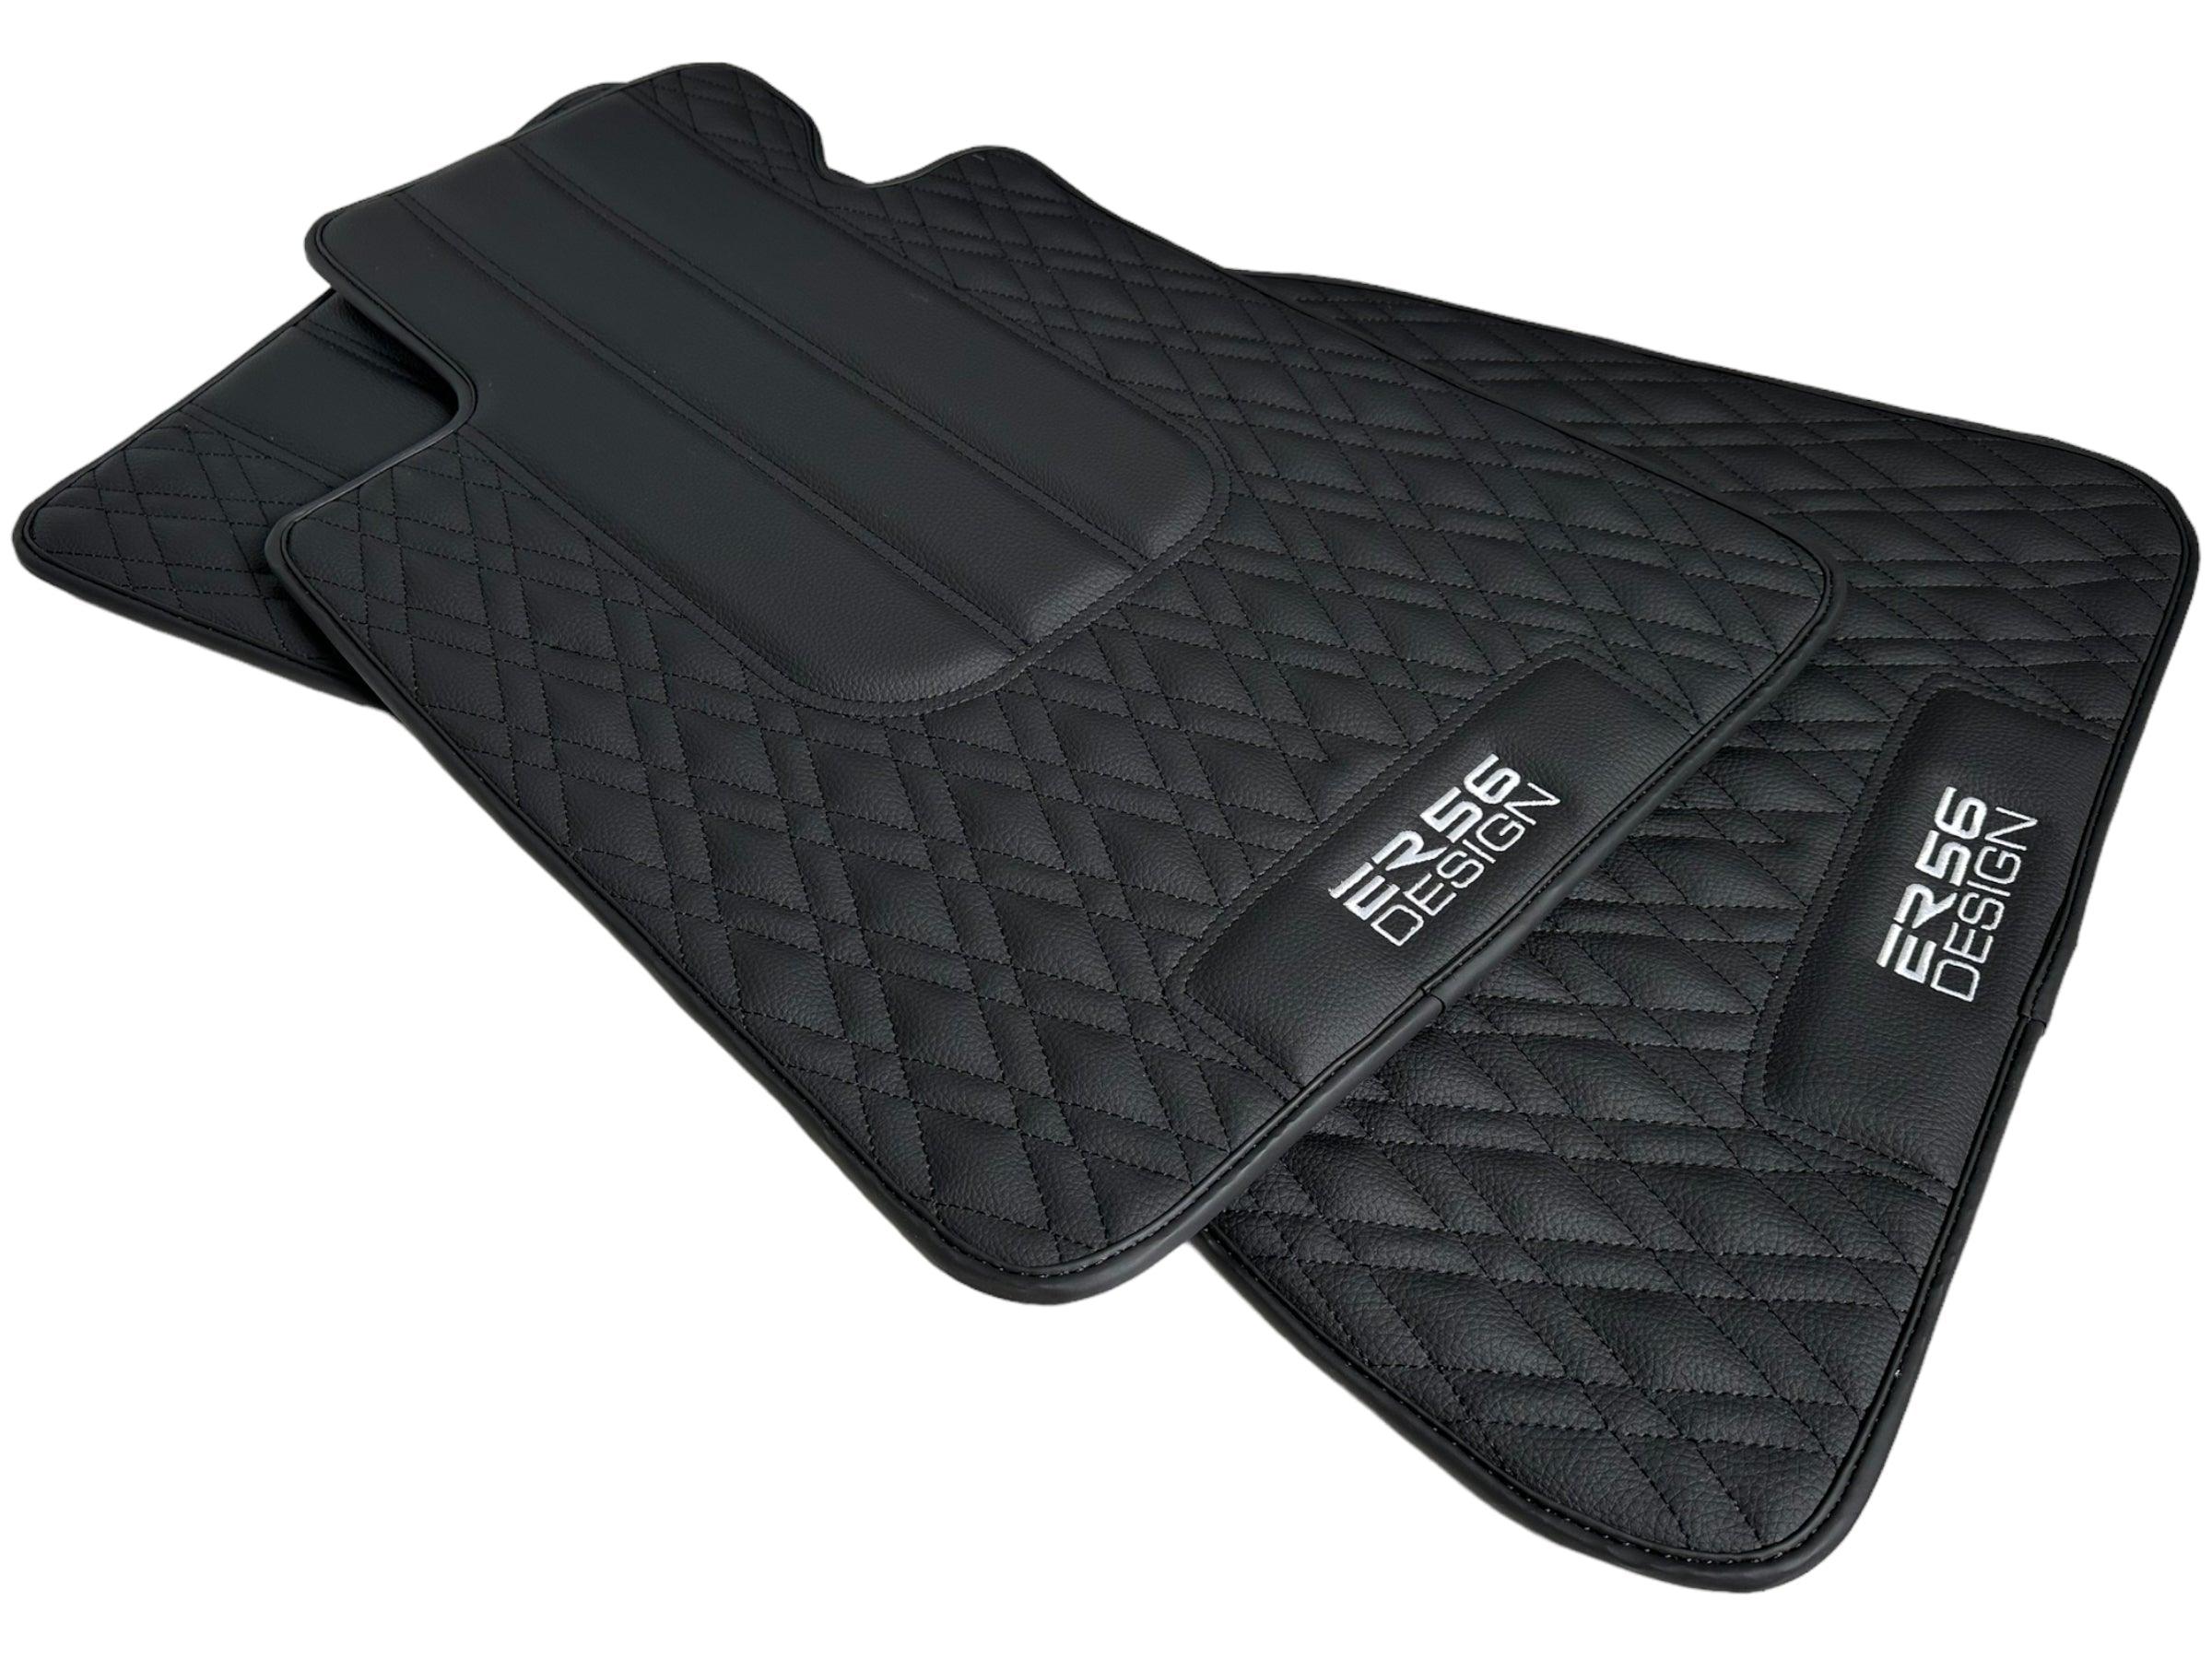 Floor Mats For BMW 3 Series E36 Convertible Black Leather Er56 Design - AutoWin